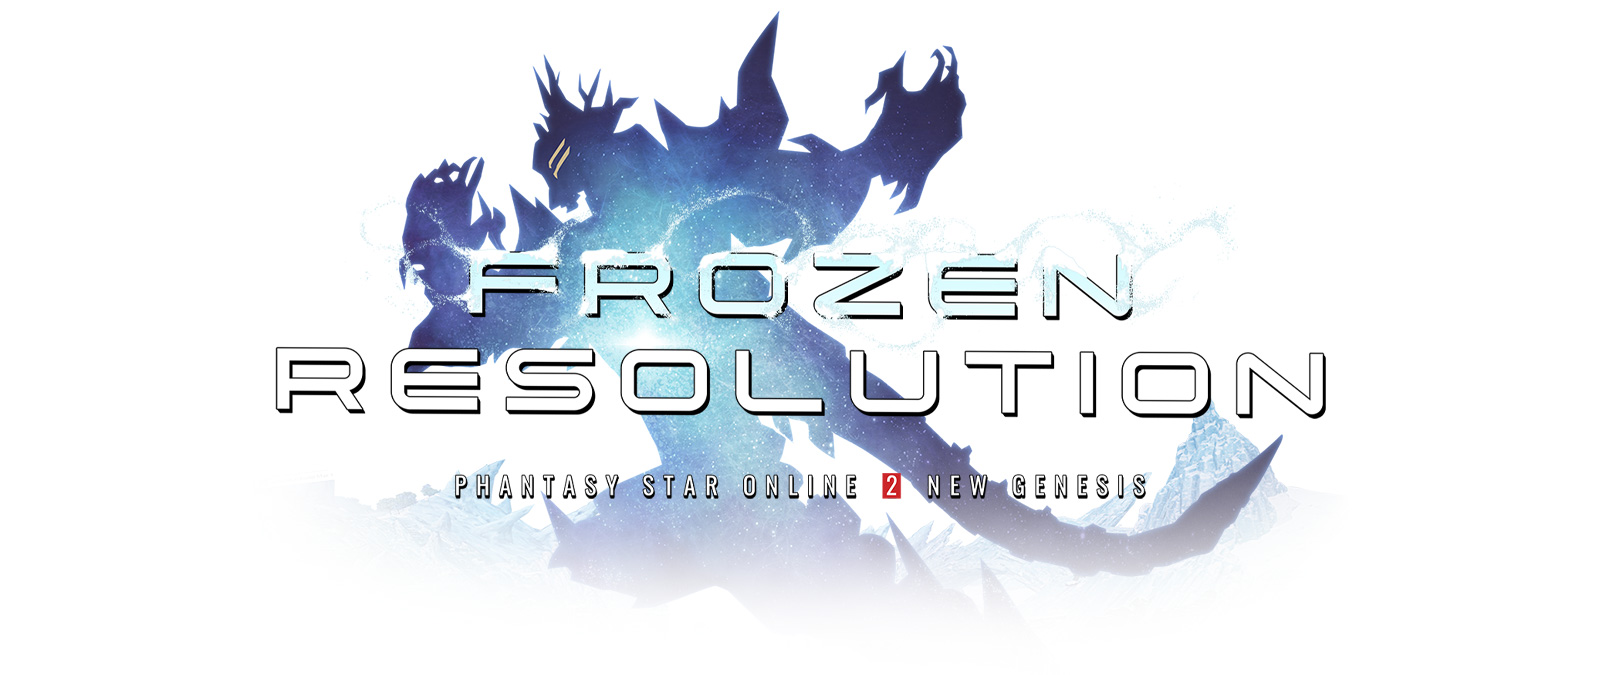 Frozen Resolution, Phantasy Star Online 2 New Genesis, 갑옷 슈트의 실루엣이 서리로 뒤덮여 있습니다.